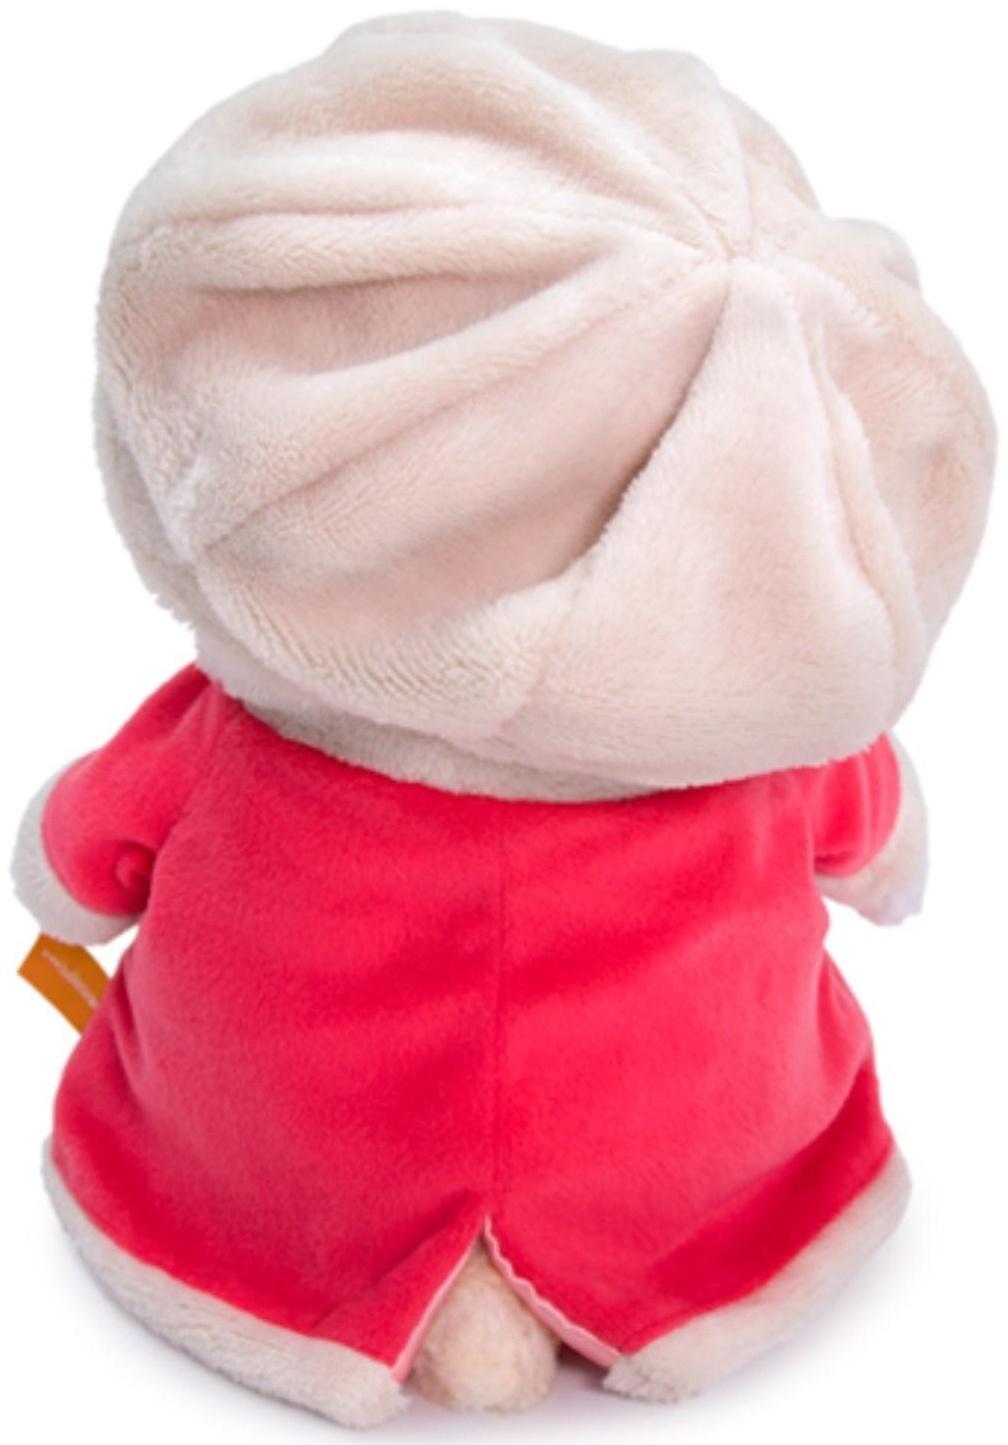 Мягкая игрушка «Ли-Ли BABY в костюме со снежинкой», 20 см